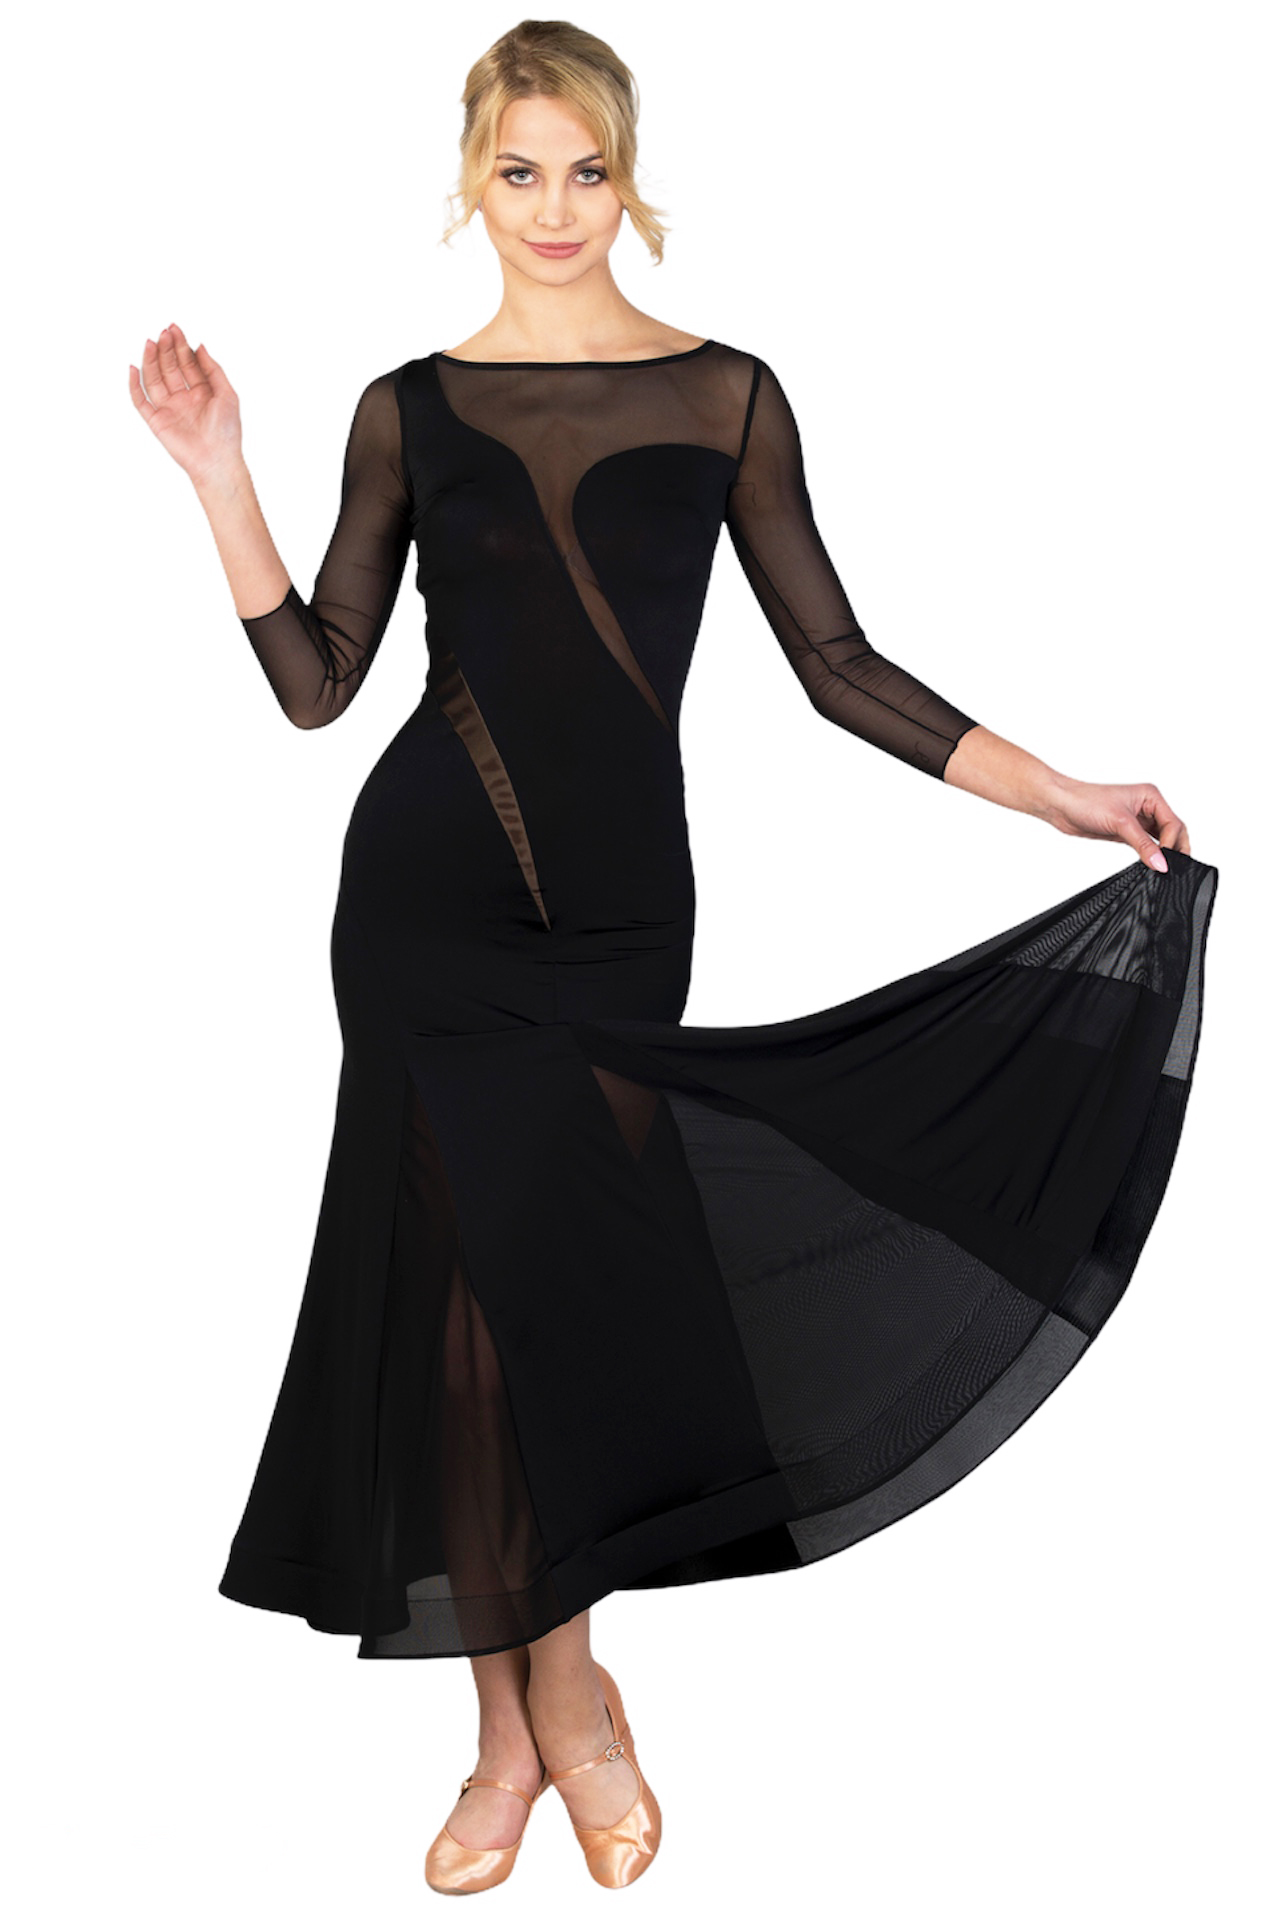 Tango Dress Black / P17120019-01